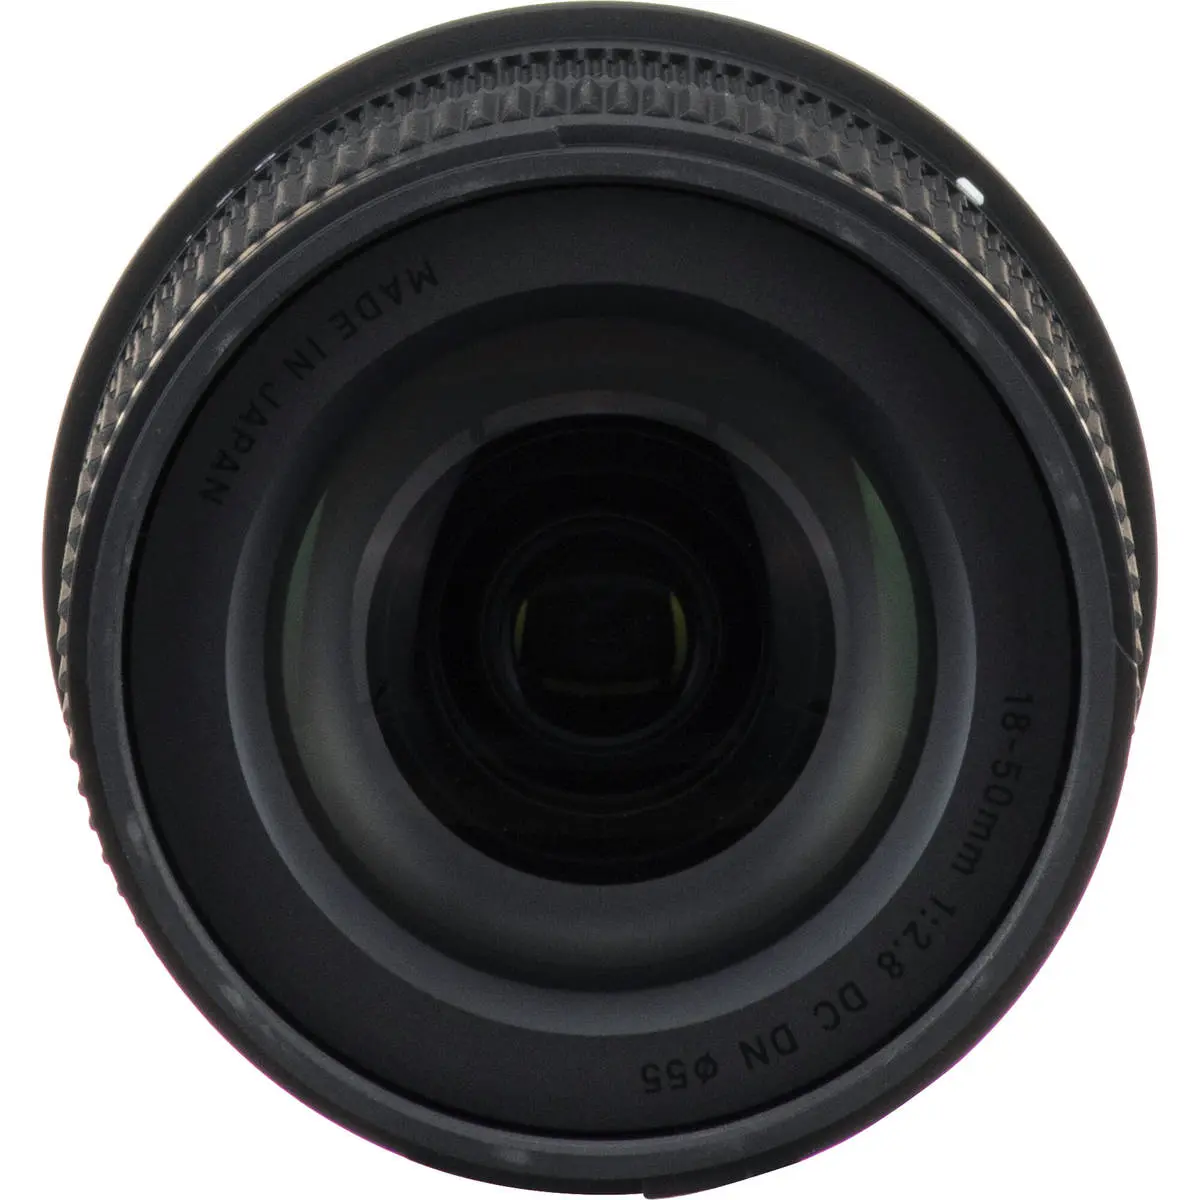 6. Sigma 18-50mm F2.8 DC DN | Contemporary (L-mount)